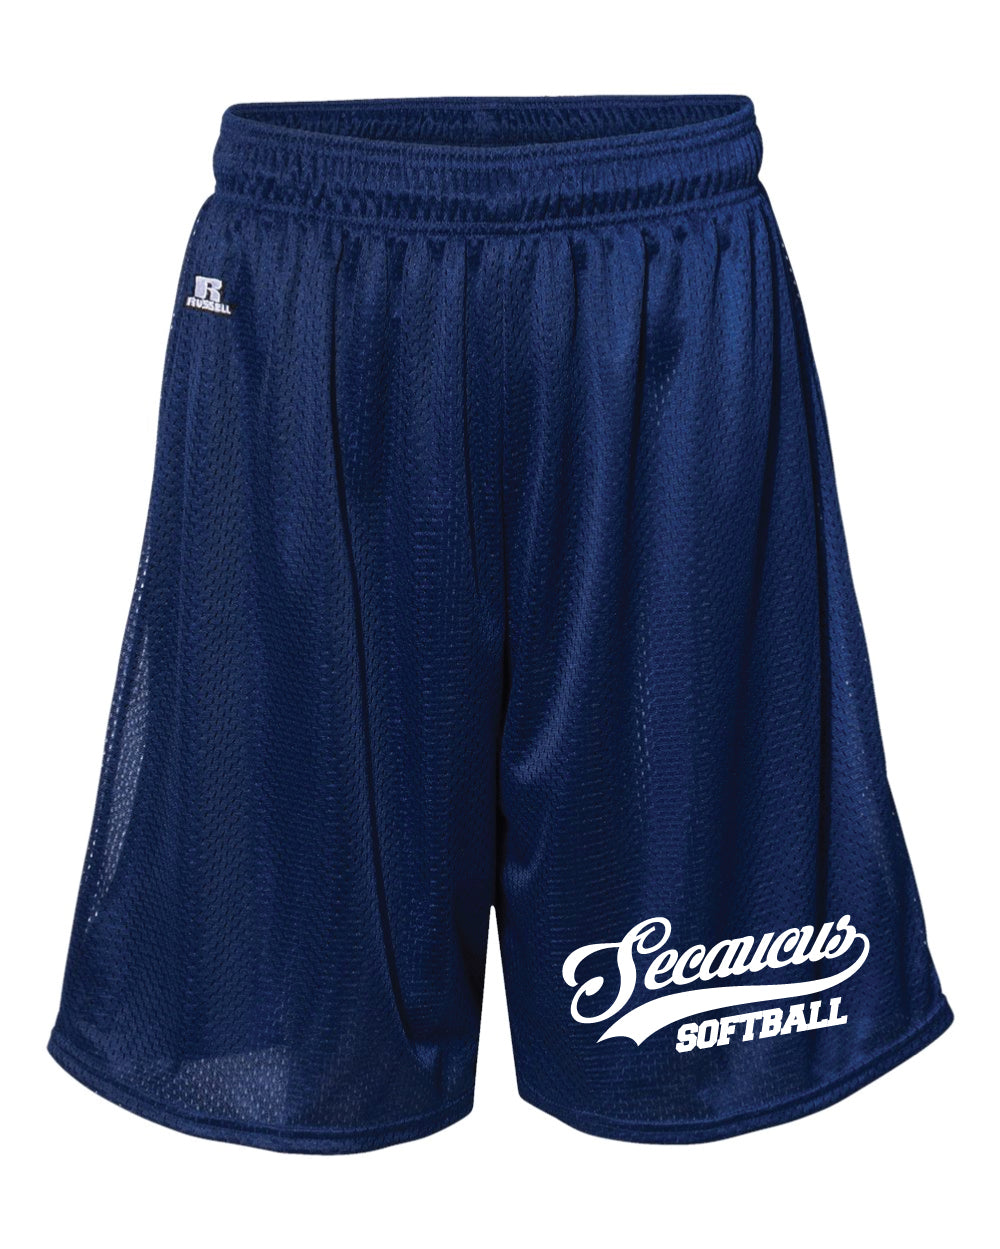 Secaucus softball Russell Athletic Tech Shorts - Navy - 5KounT2018